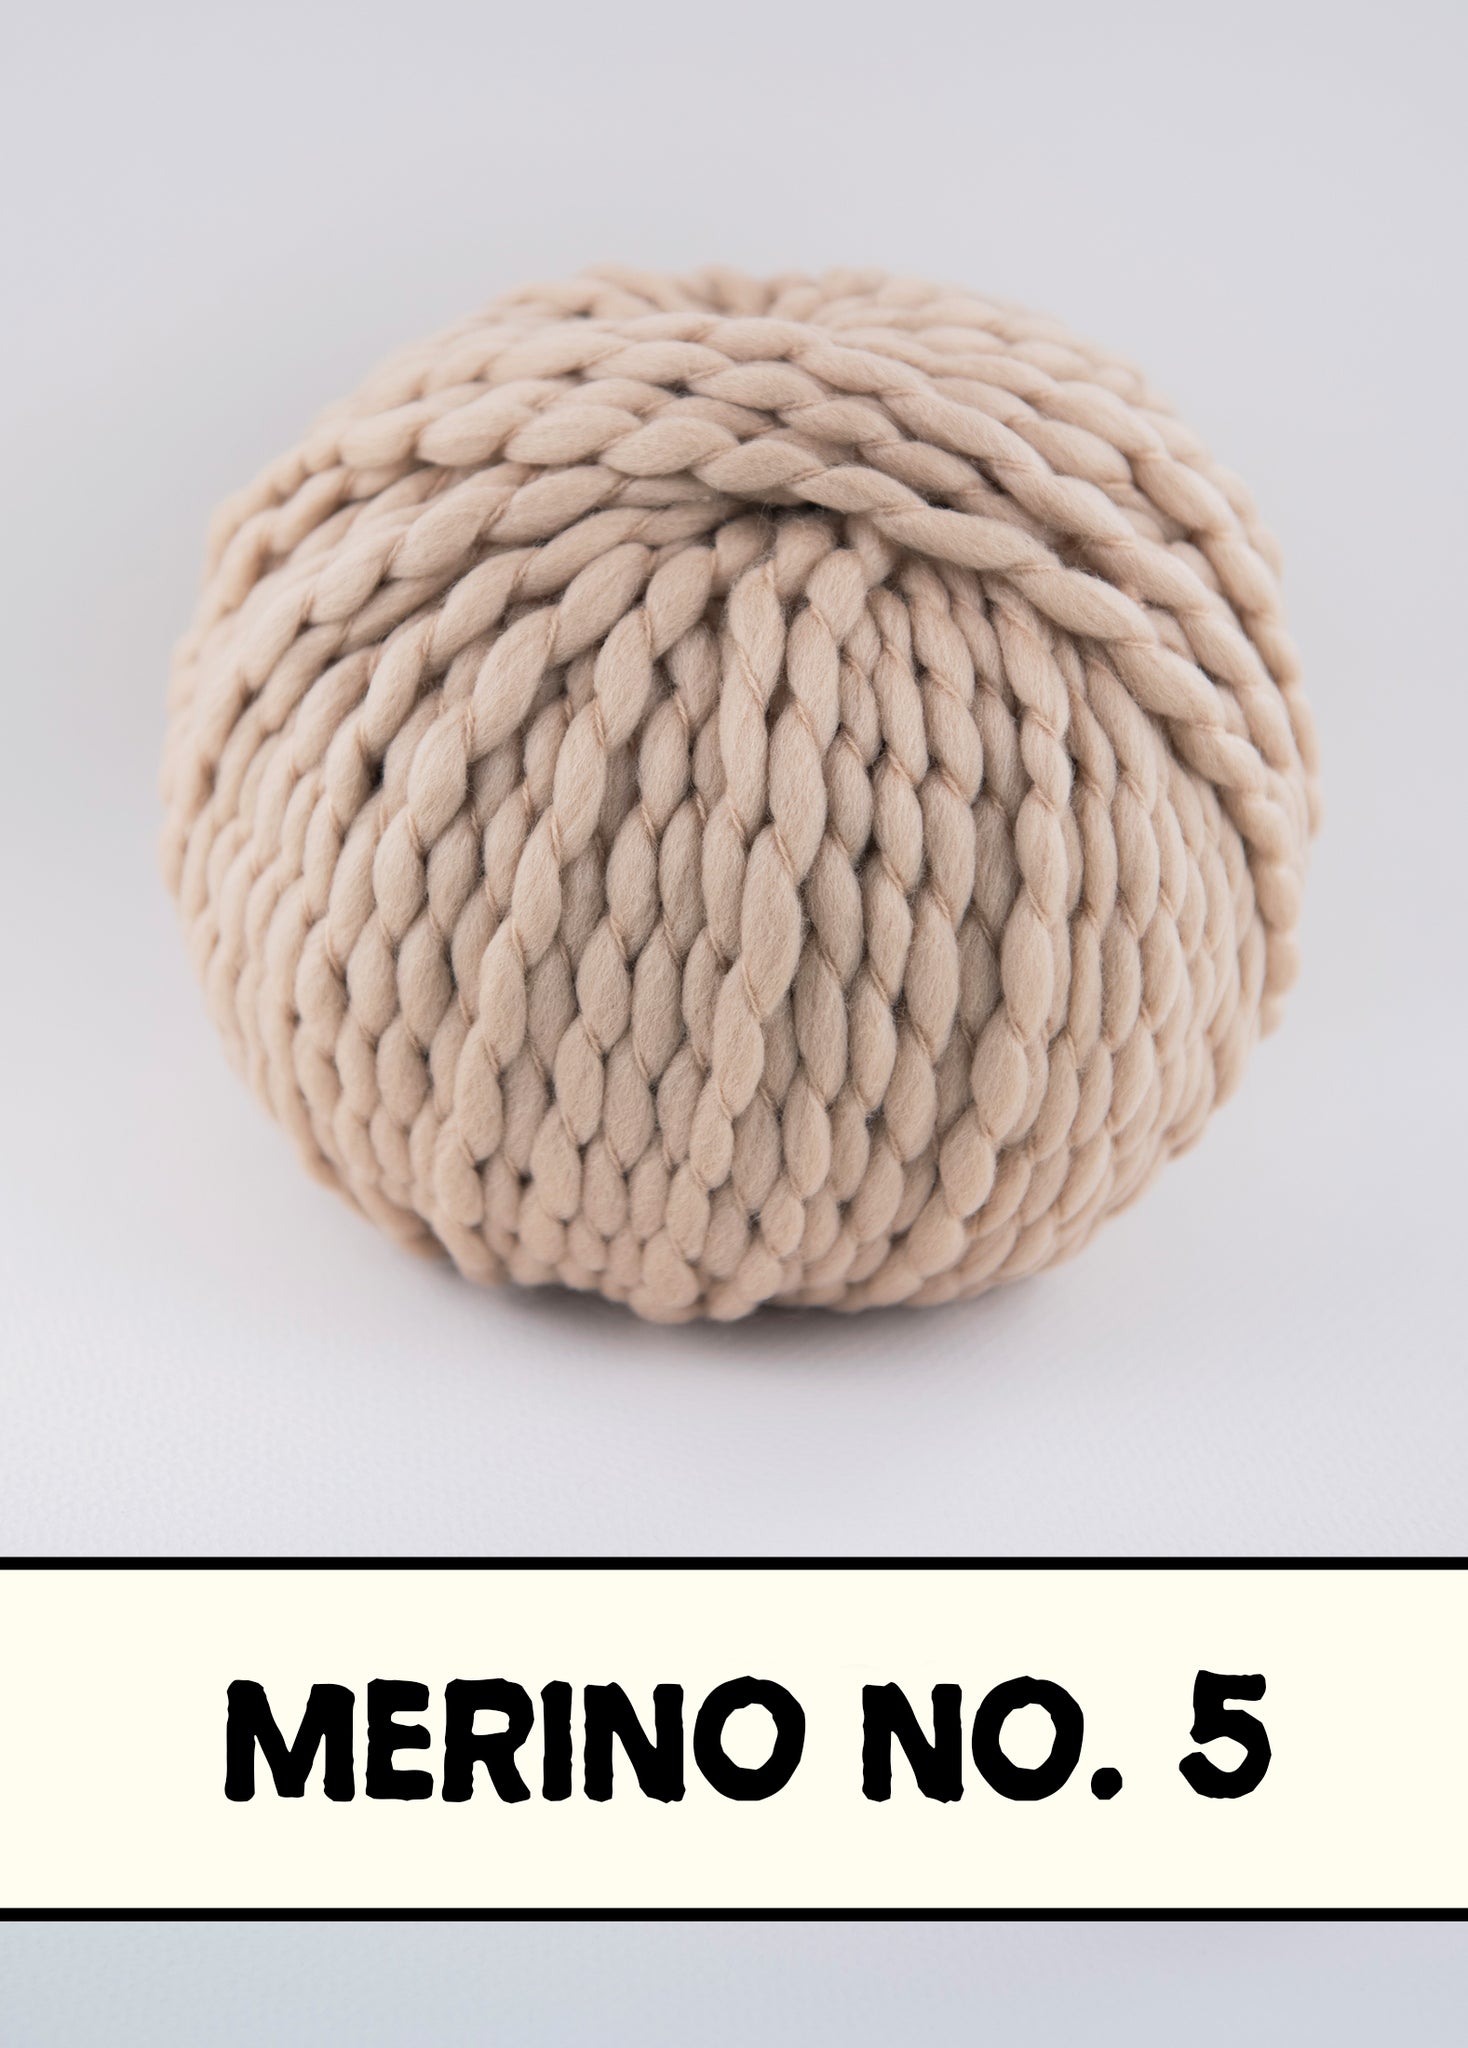 Merino-Moments # 5 Big Bulky Weight Merino Wool Blend Pack of 4 Sapphire  Blue